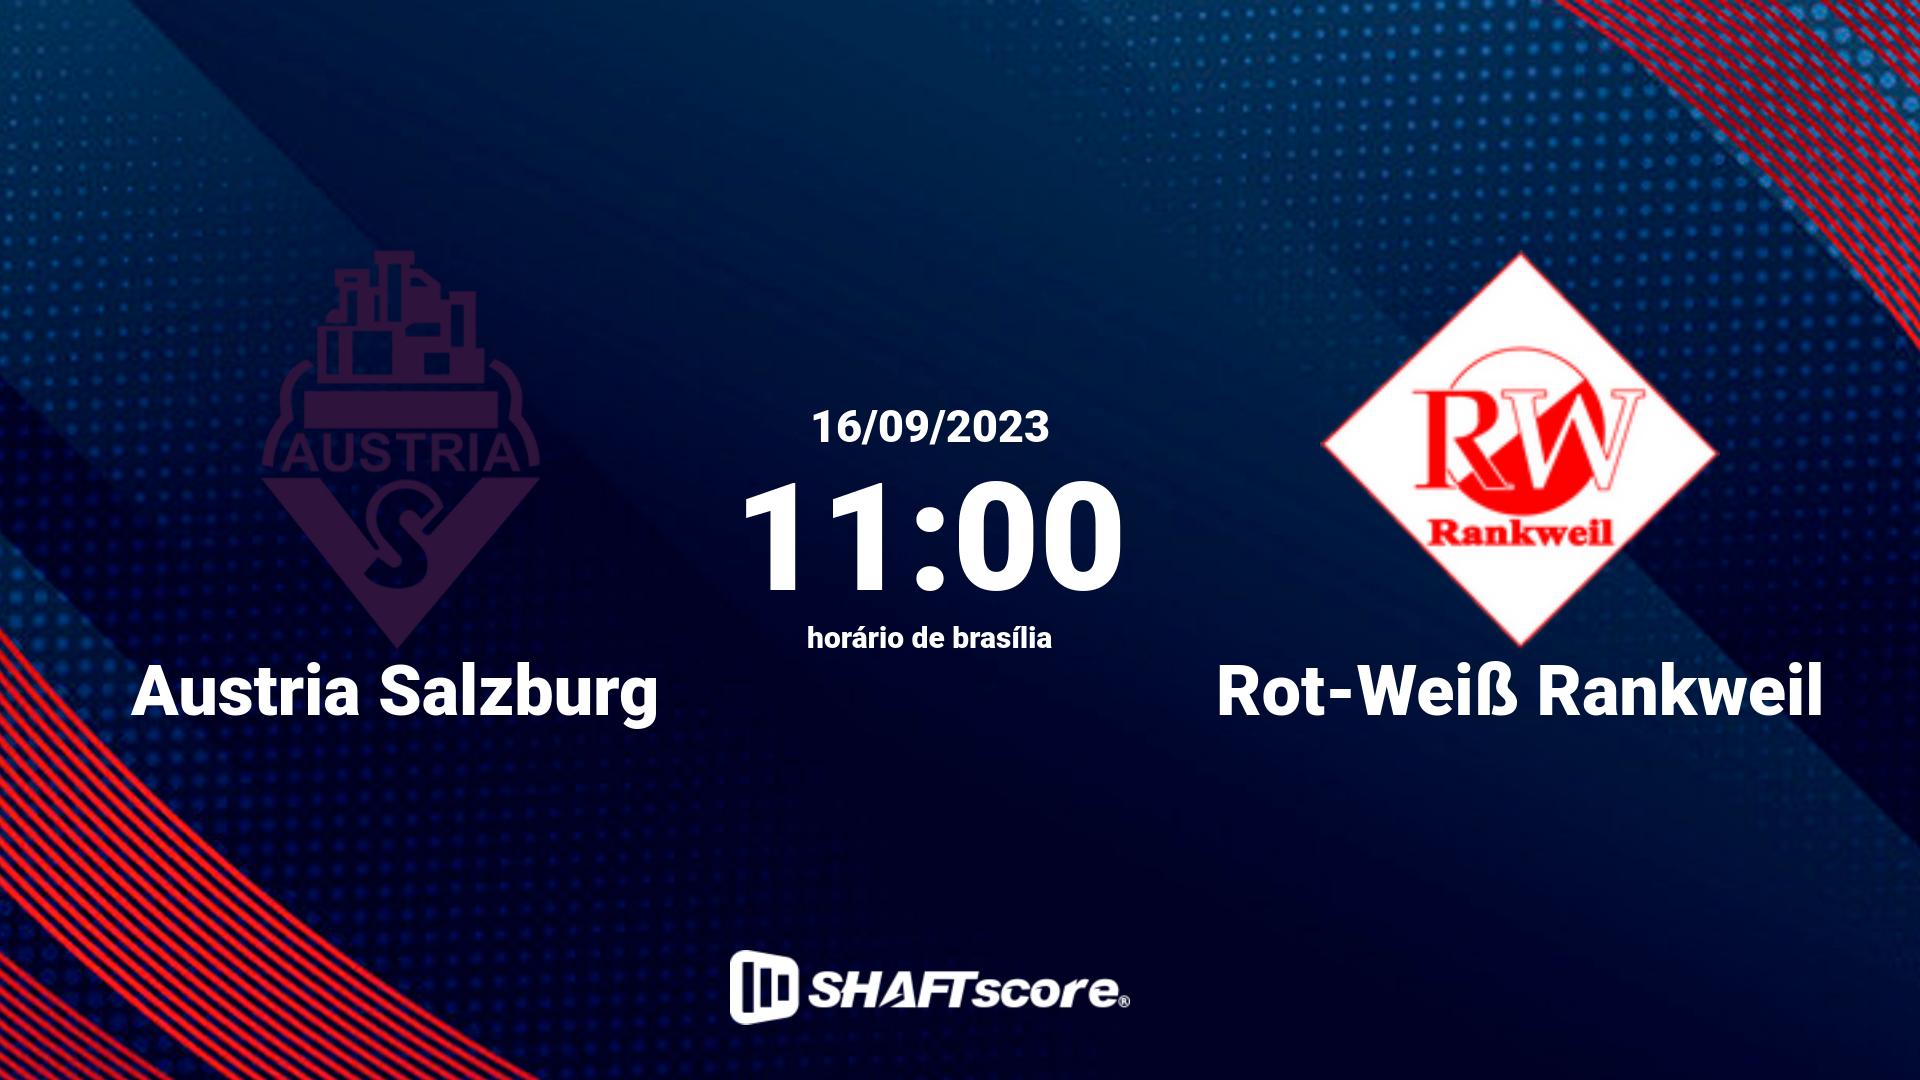 Estatísticas do jogo Austria Salzburg vs Rot-Weiß Rankweil 16.09 11:00